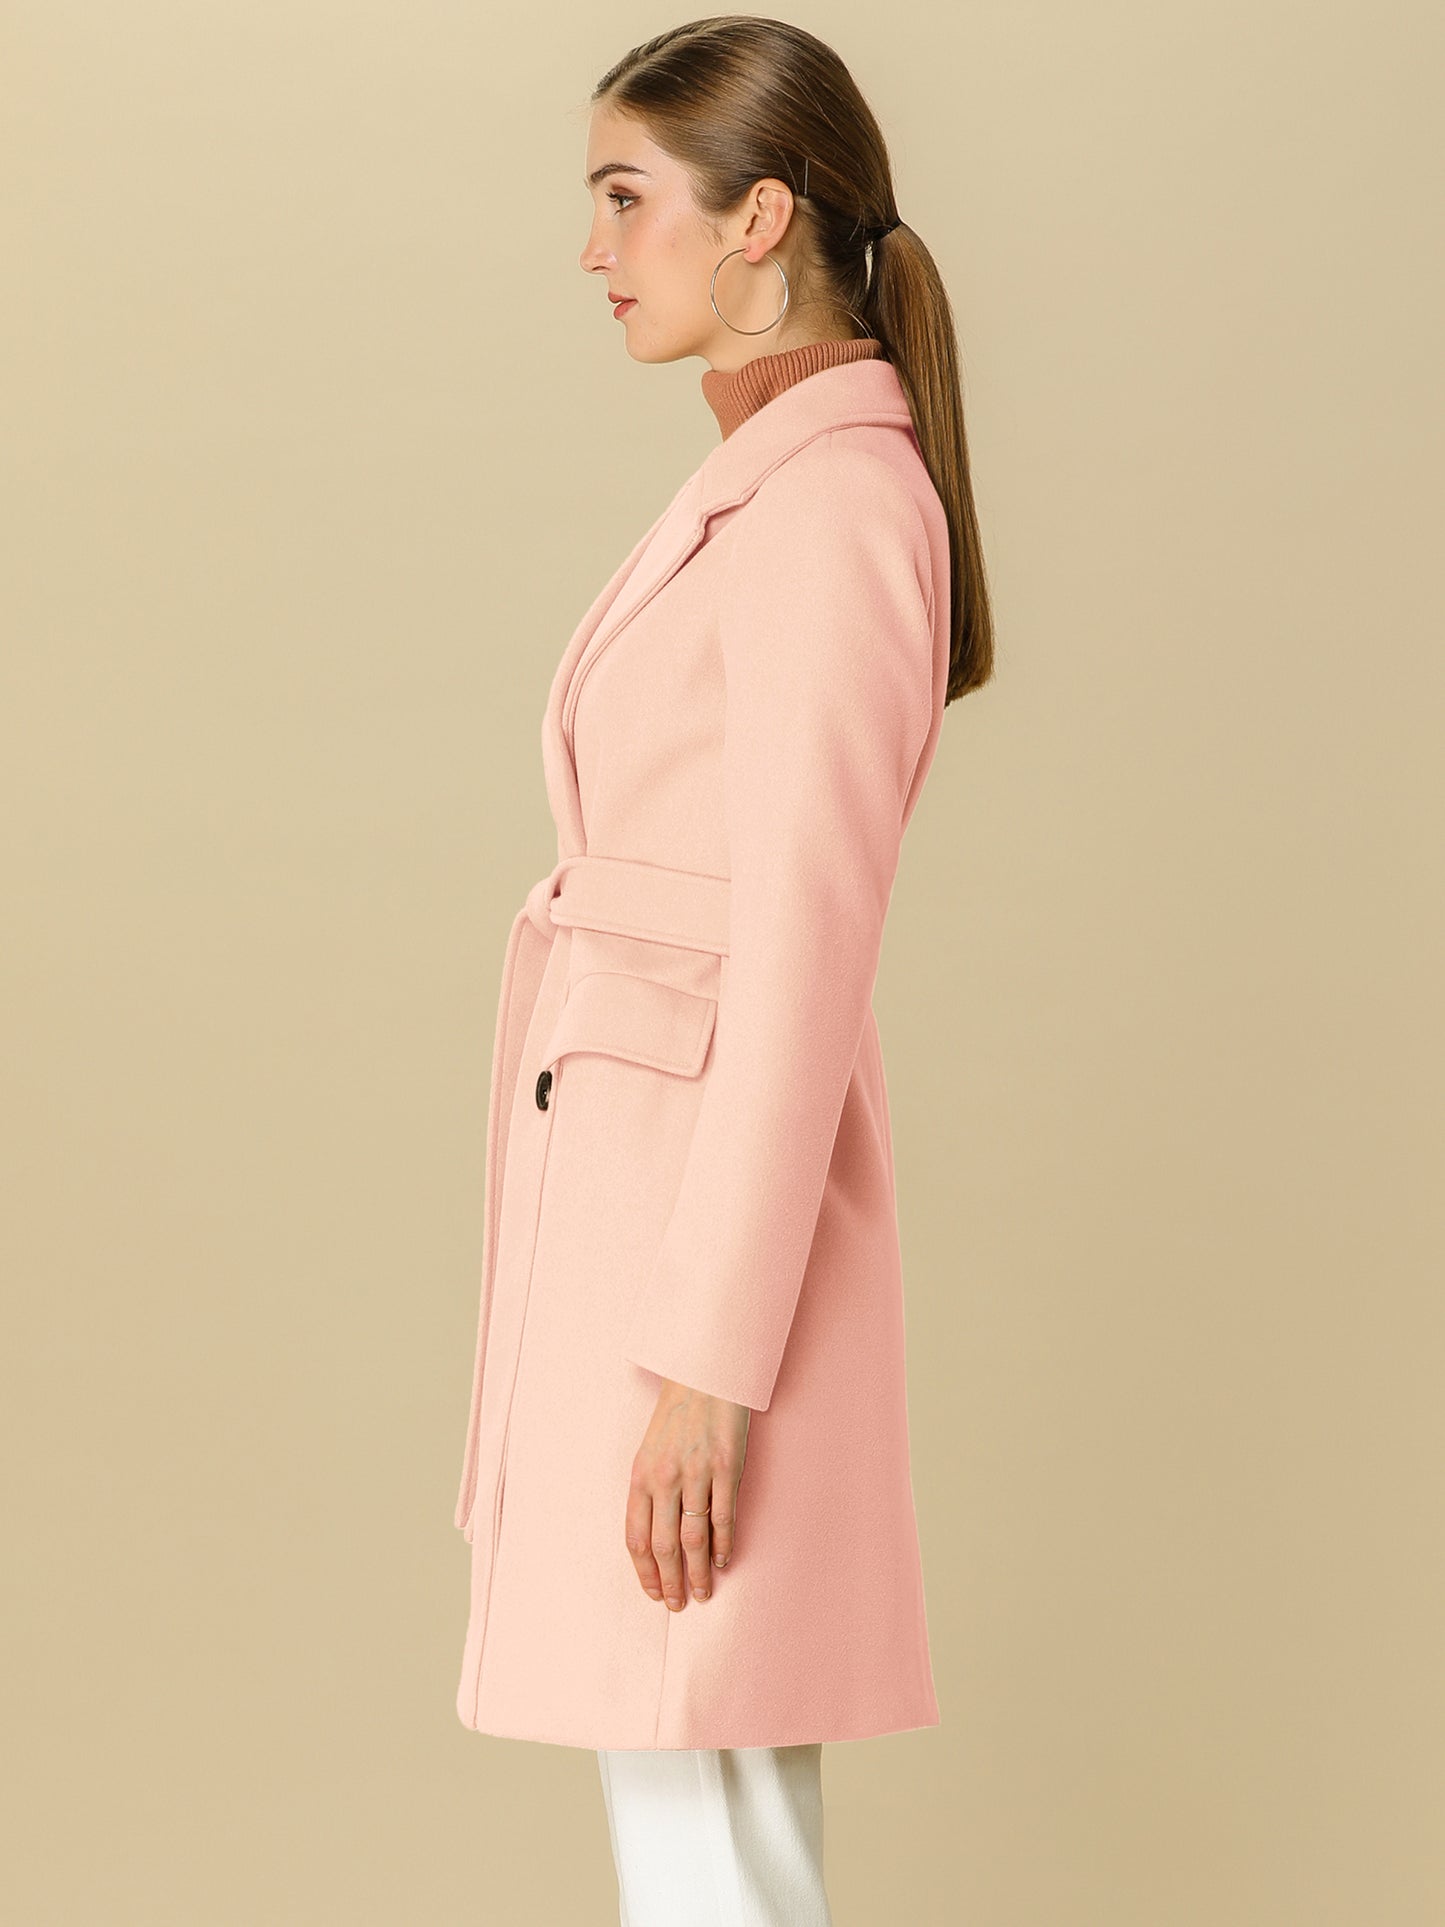 Allegra K Notch Lapel Double Breasted Belted Mid Long Outwear Winter Coat Light Pink